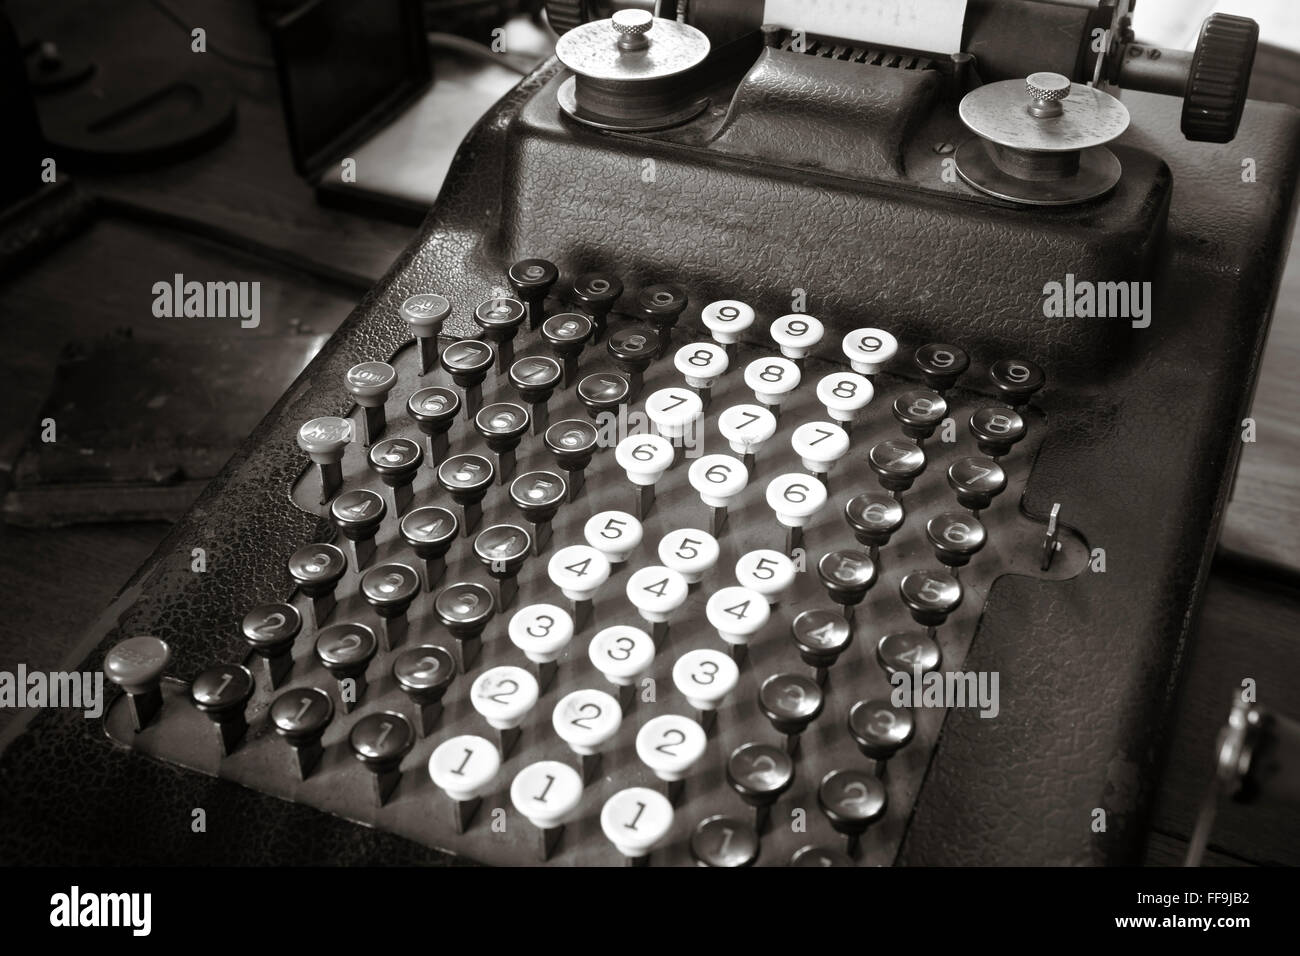 Original antique typewriter calculator in sepia tone. Horizontal Stock Photo